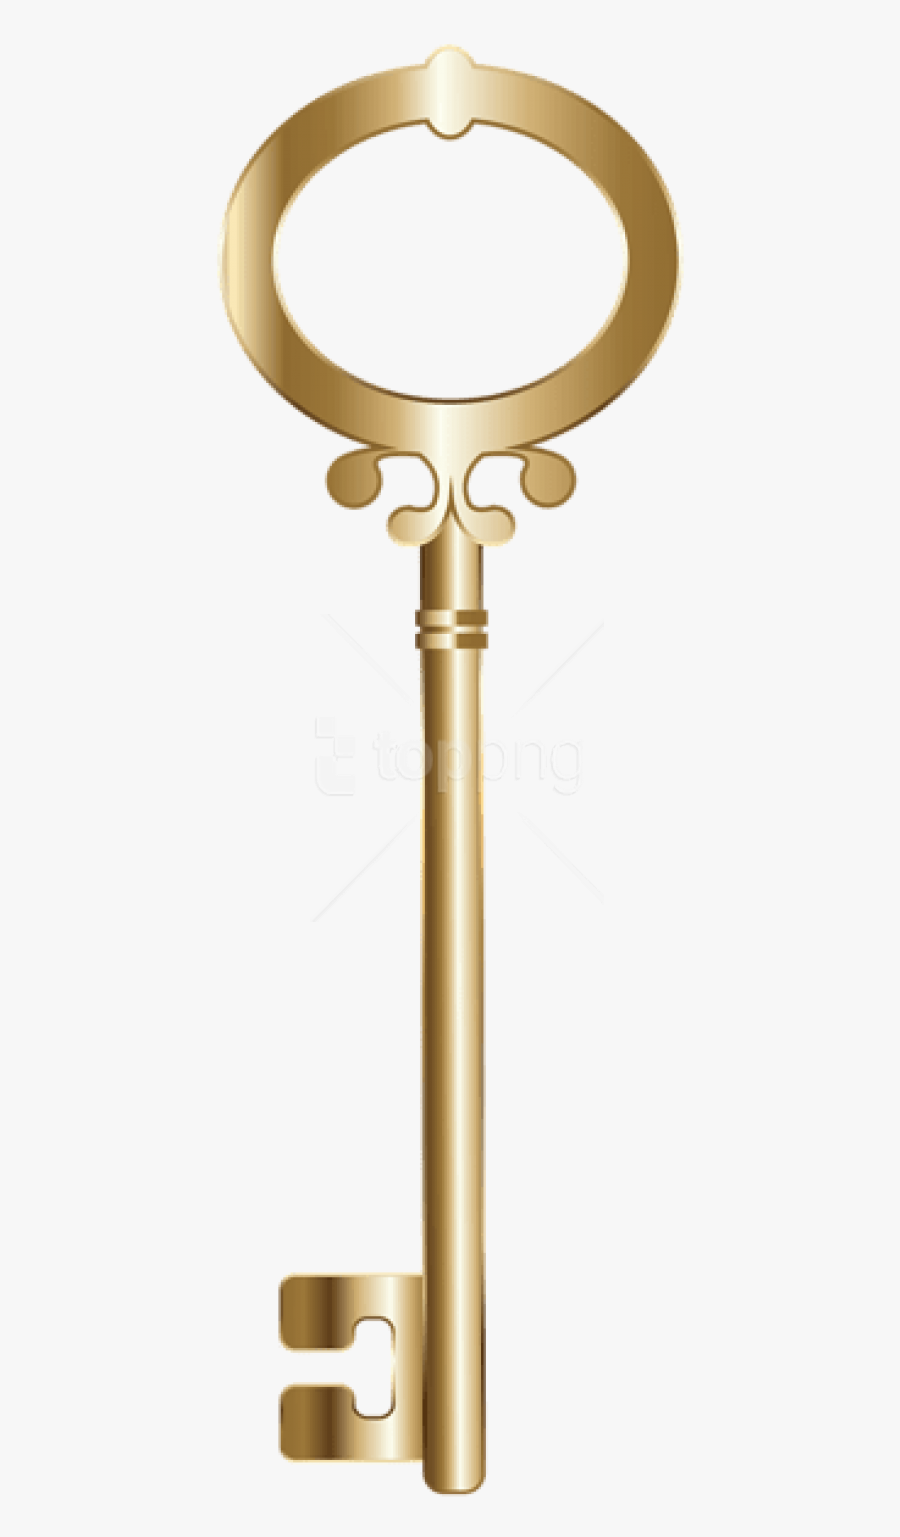 Gold Key Png - Transparent Gold Key, Transparent Clipart